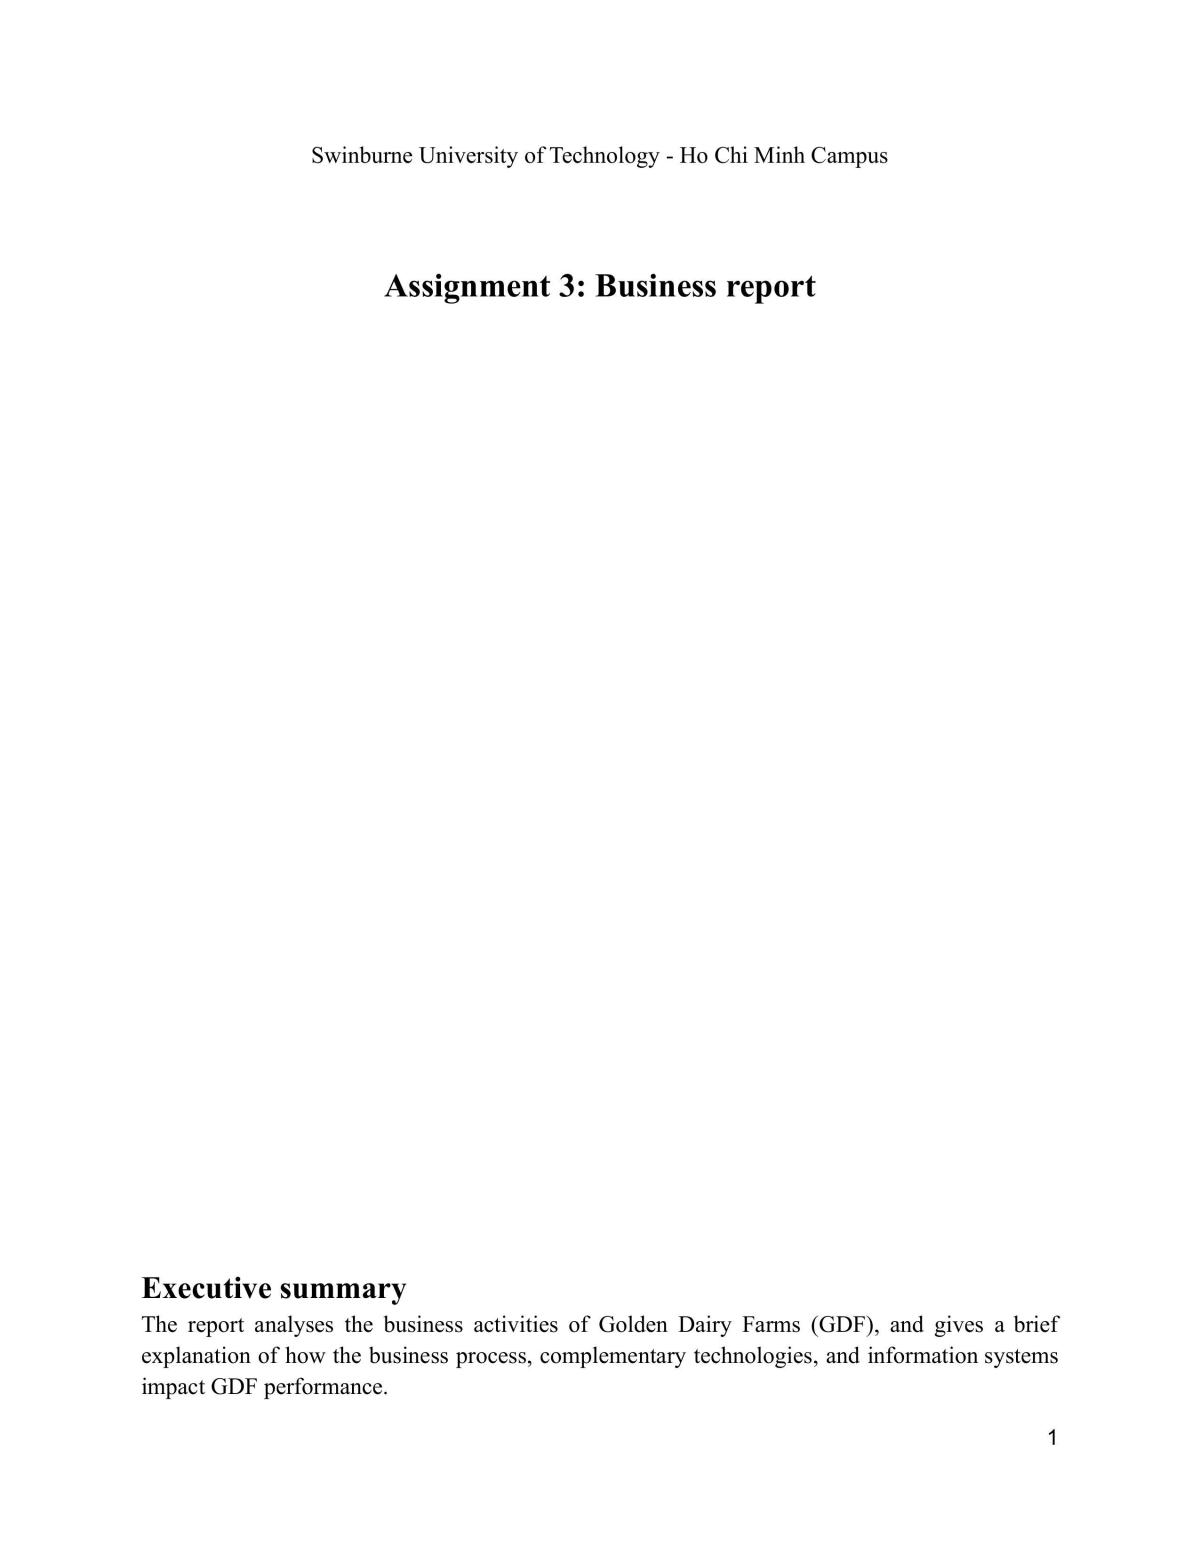 Business Scenario Report - Page 1